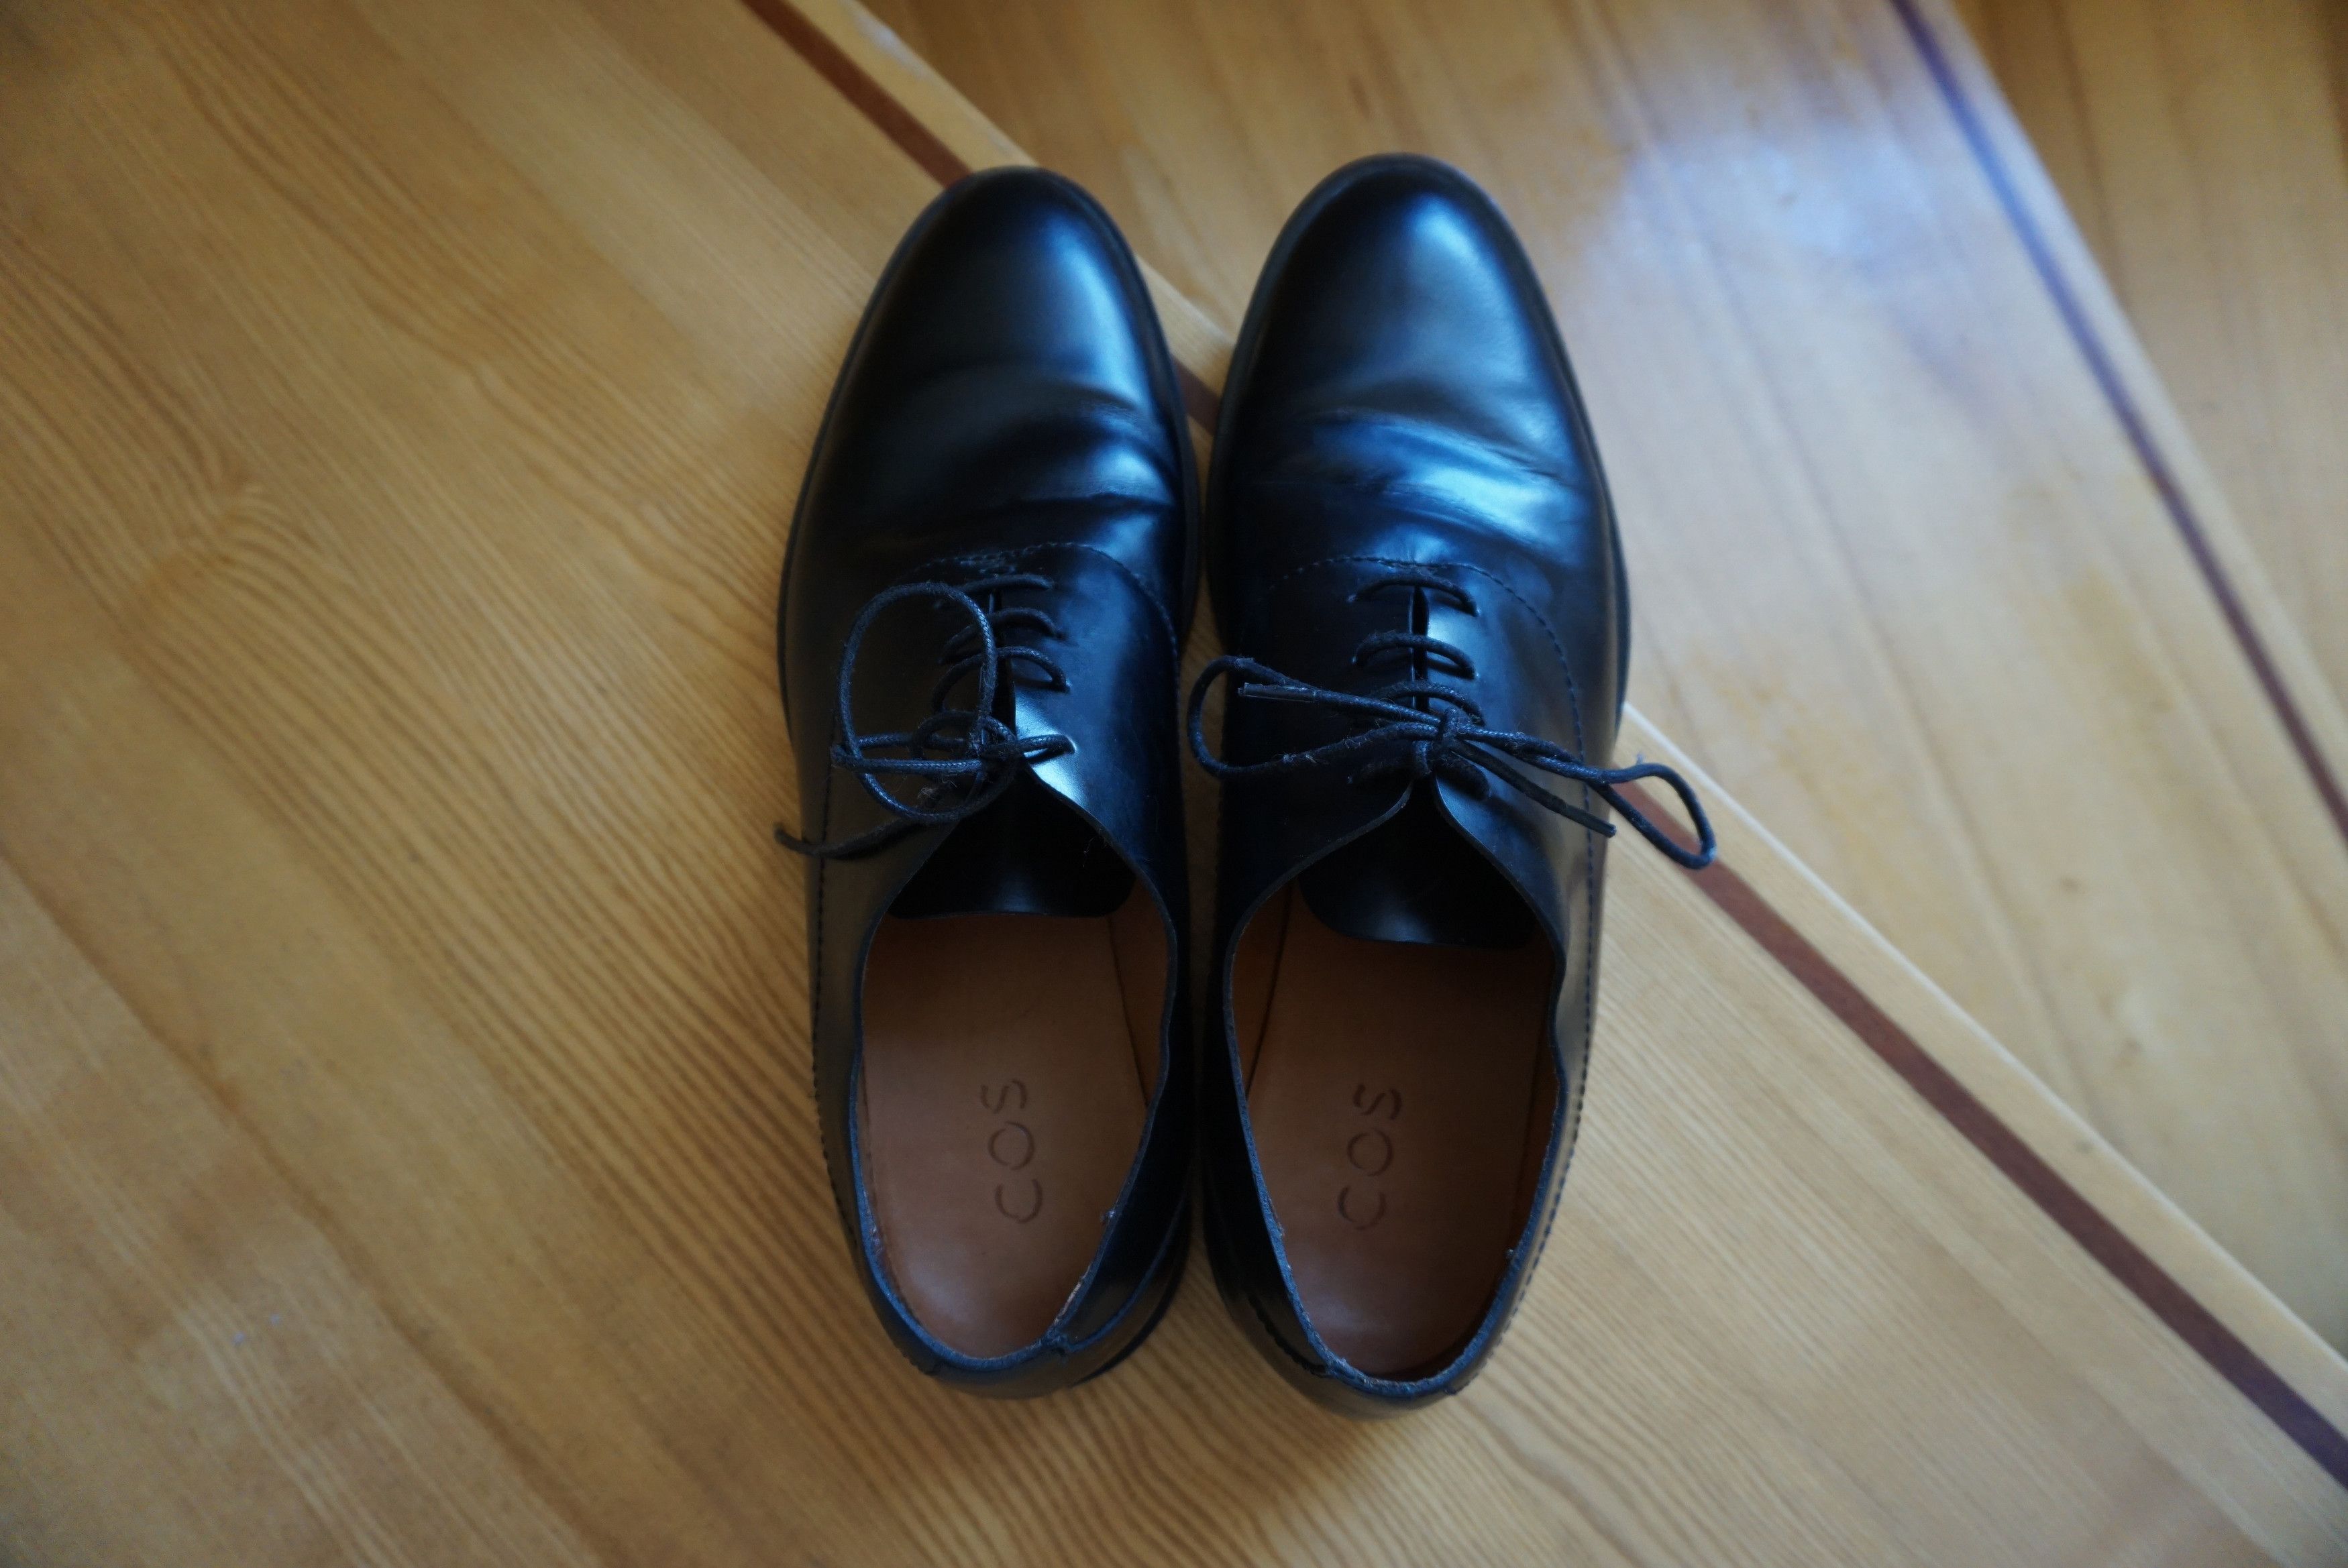 Cos COS RPR$250 leather office shoes EU44 black formal lace up Size US 10.5 / EU 43-44 - 18 Thumbnail